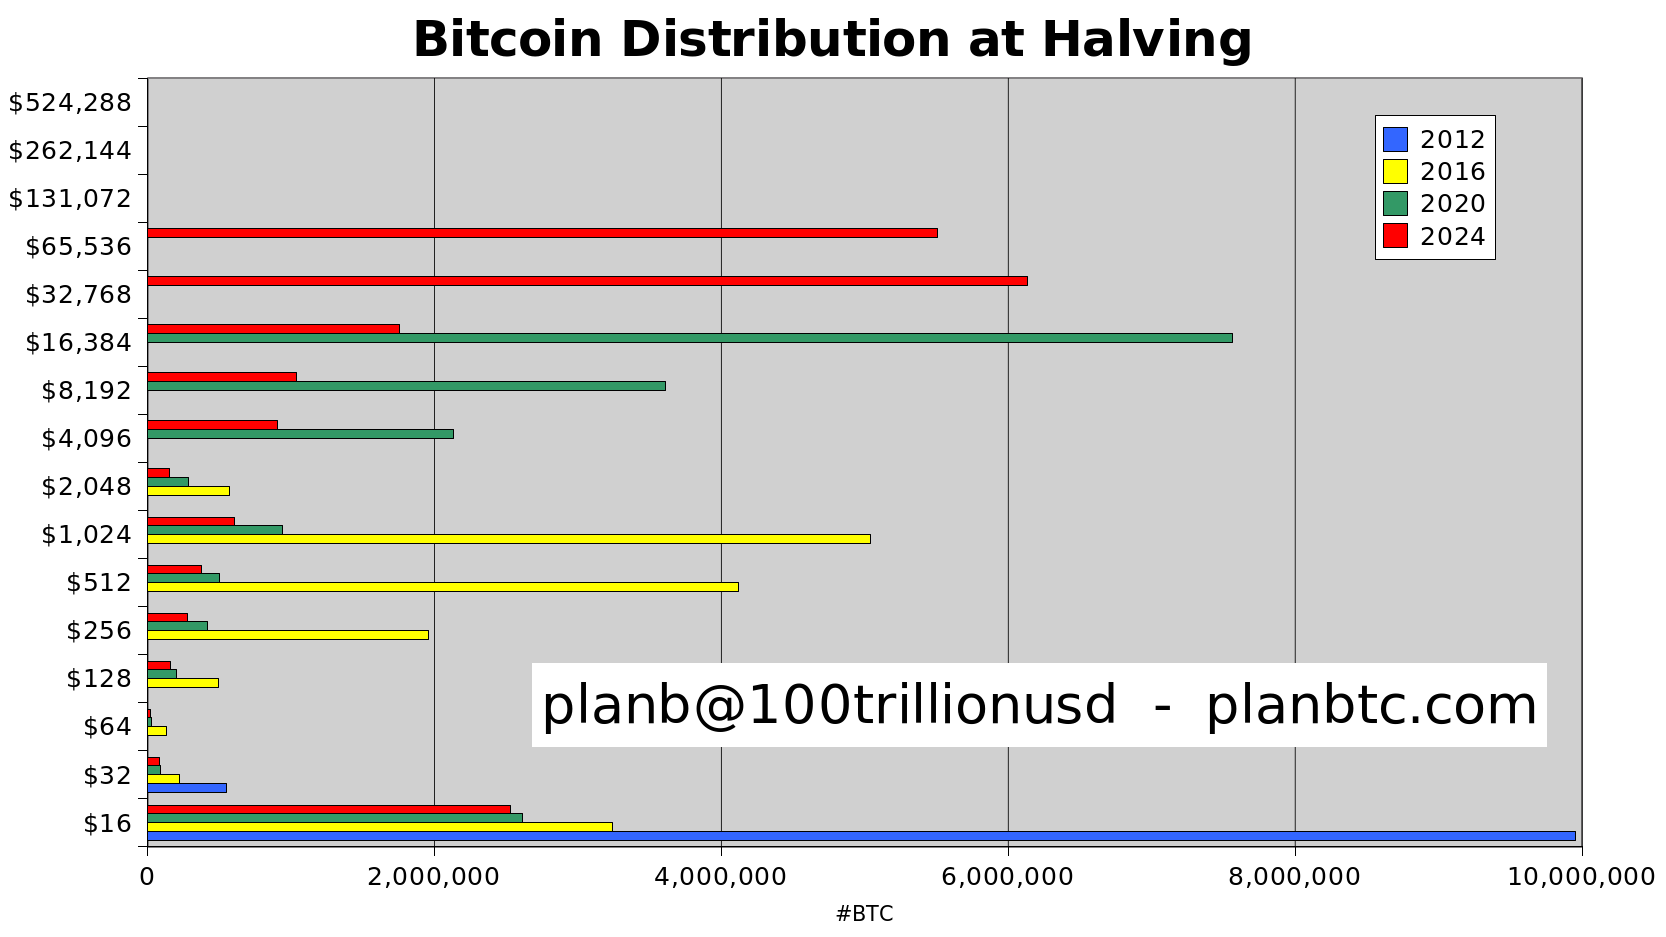 bitcoin halving